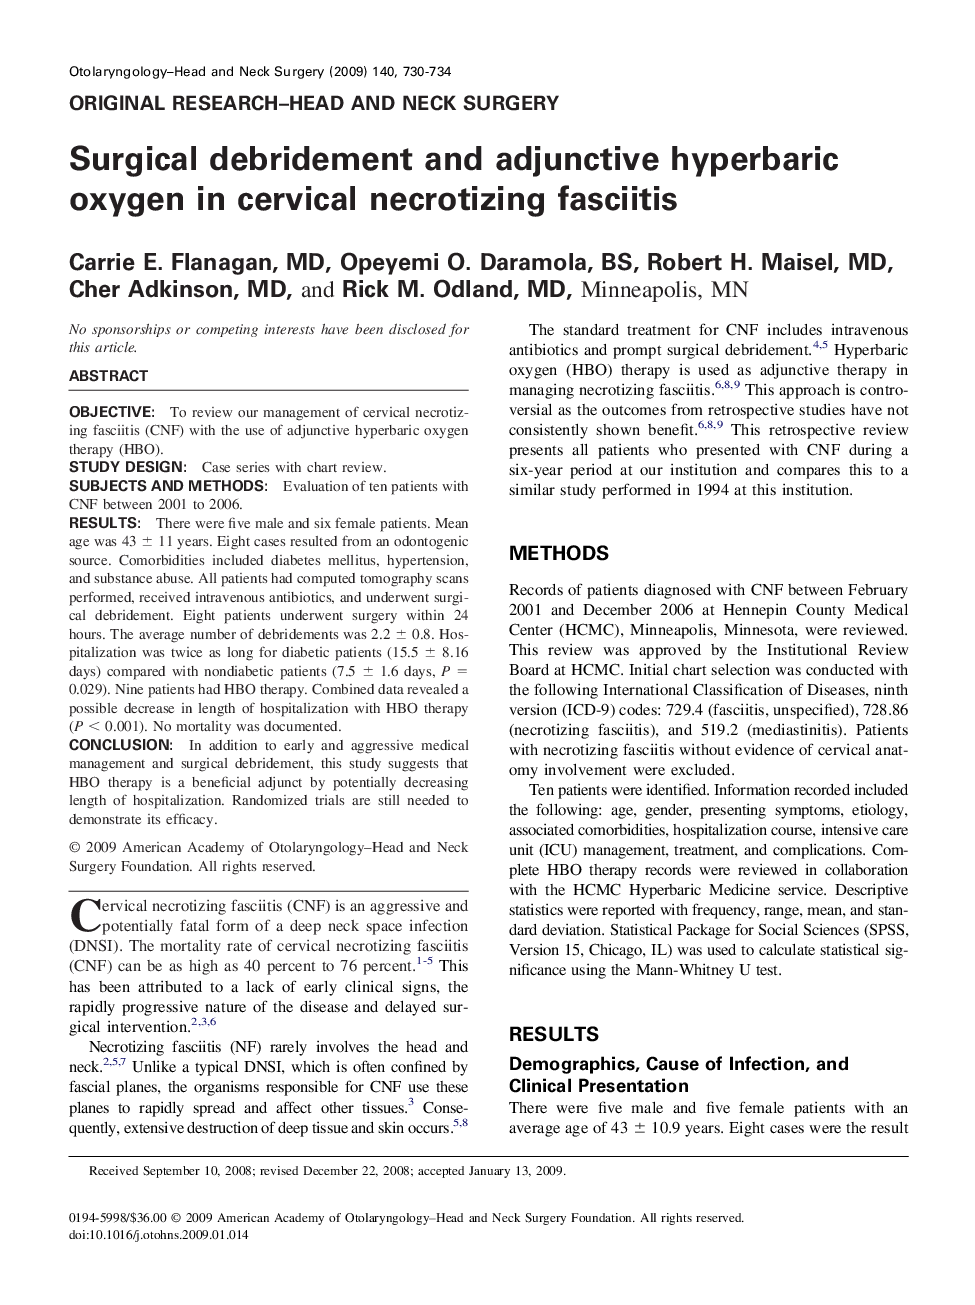 Surgical debridement and adjunctive hyperbaric oxygen in cervical necrotizing fasciitis